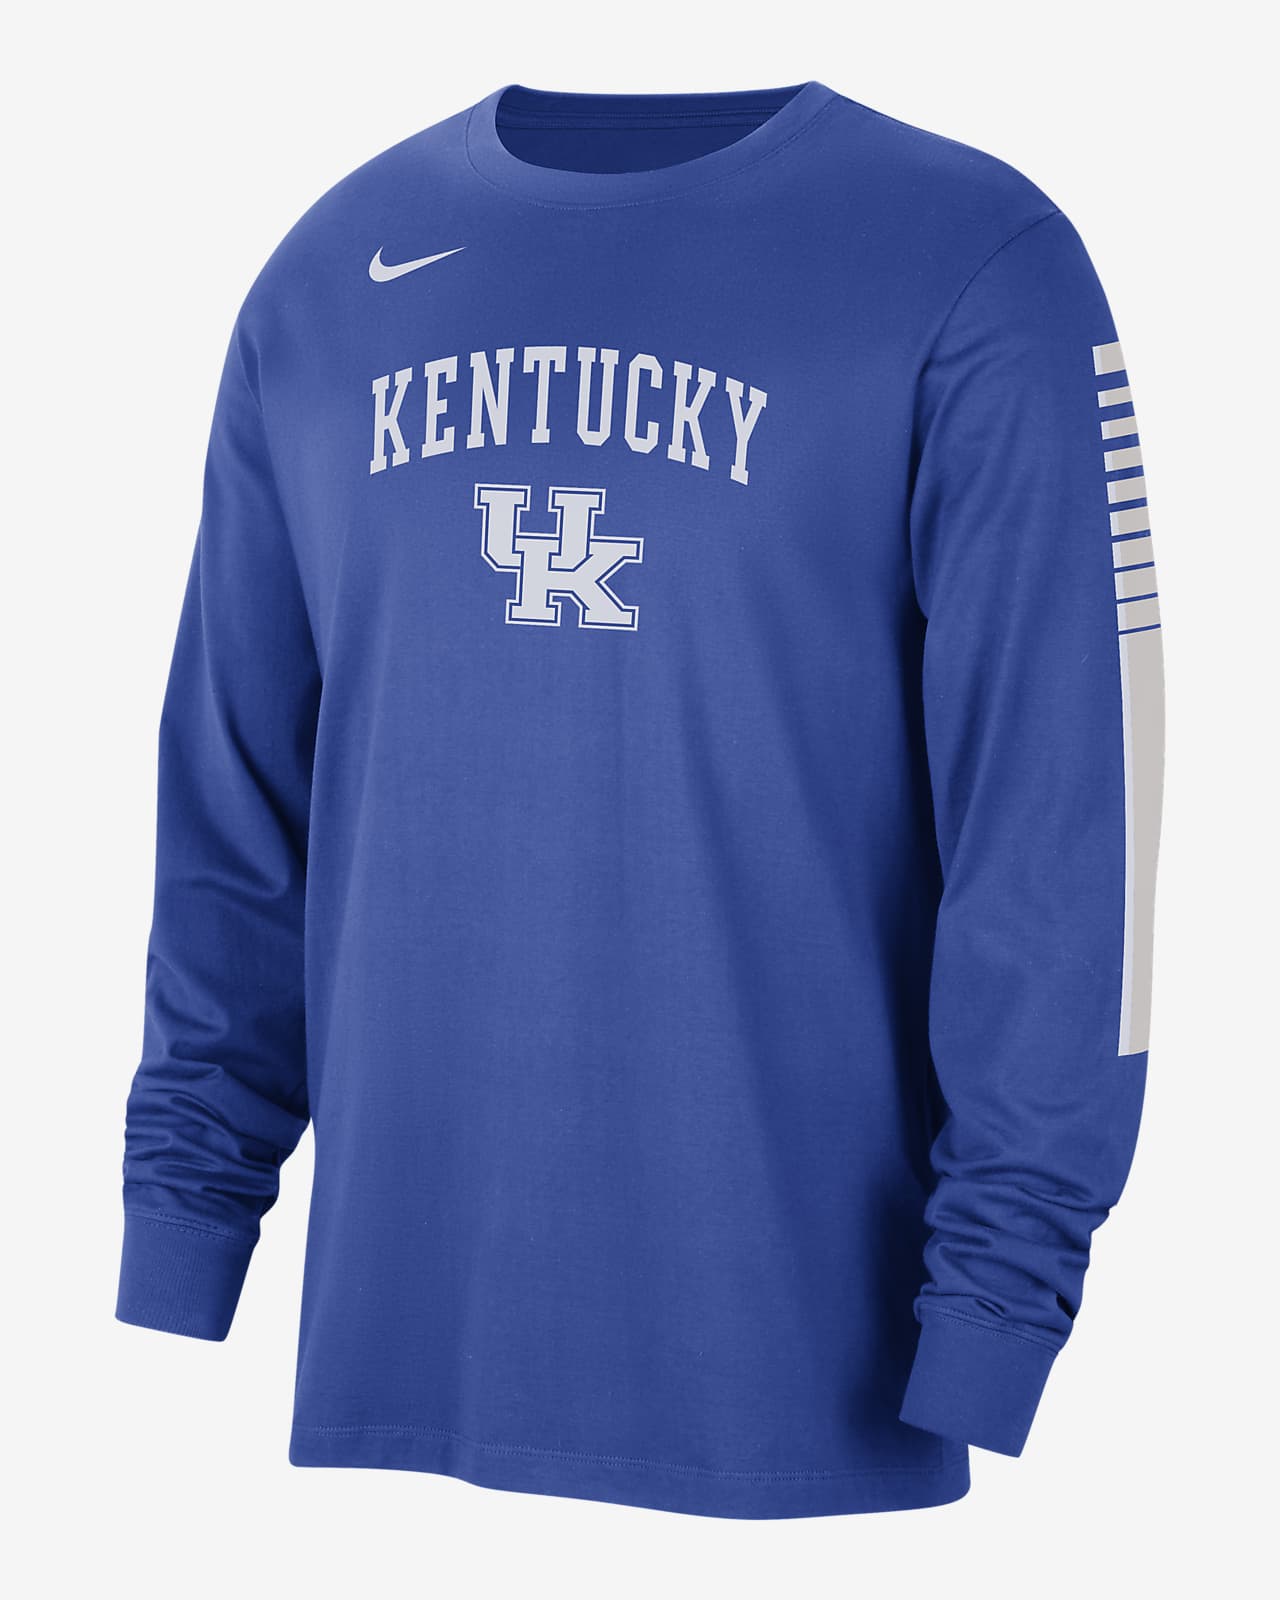 Kentucky Men's Nike College Long-Sleeve T-Shirt